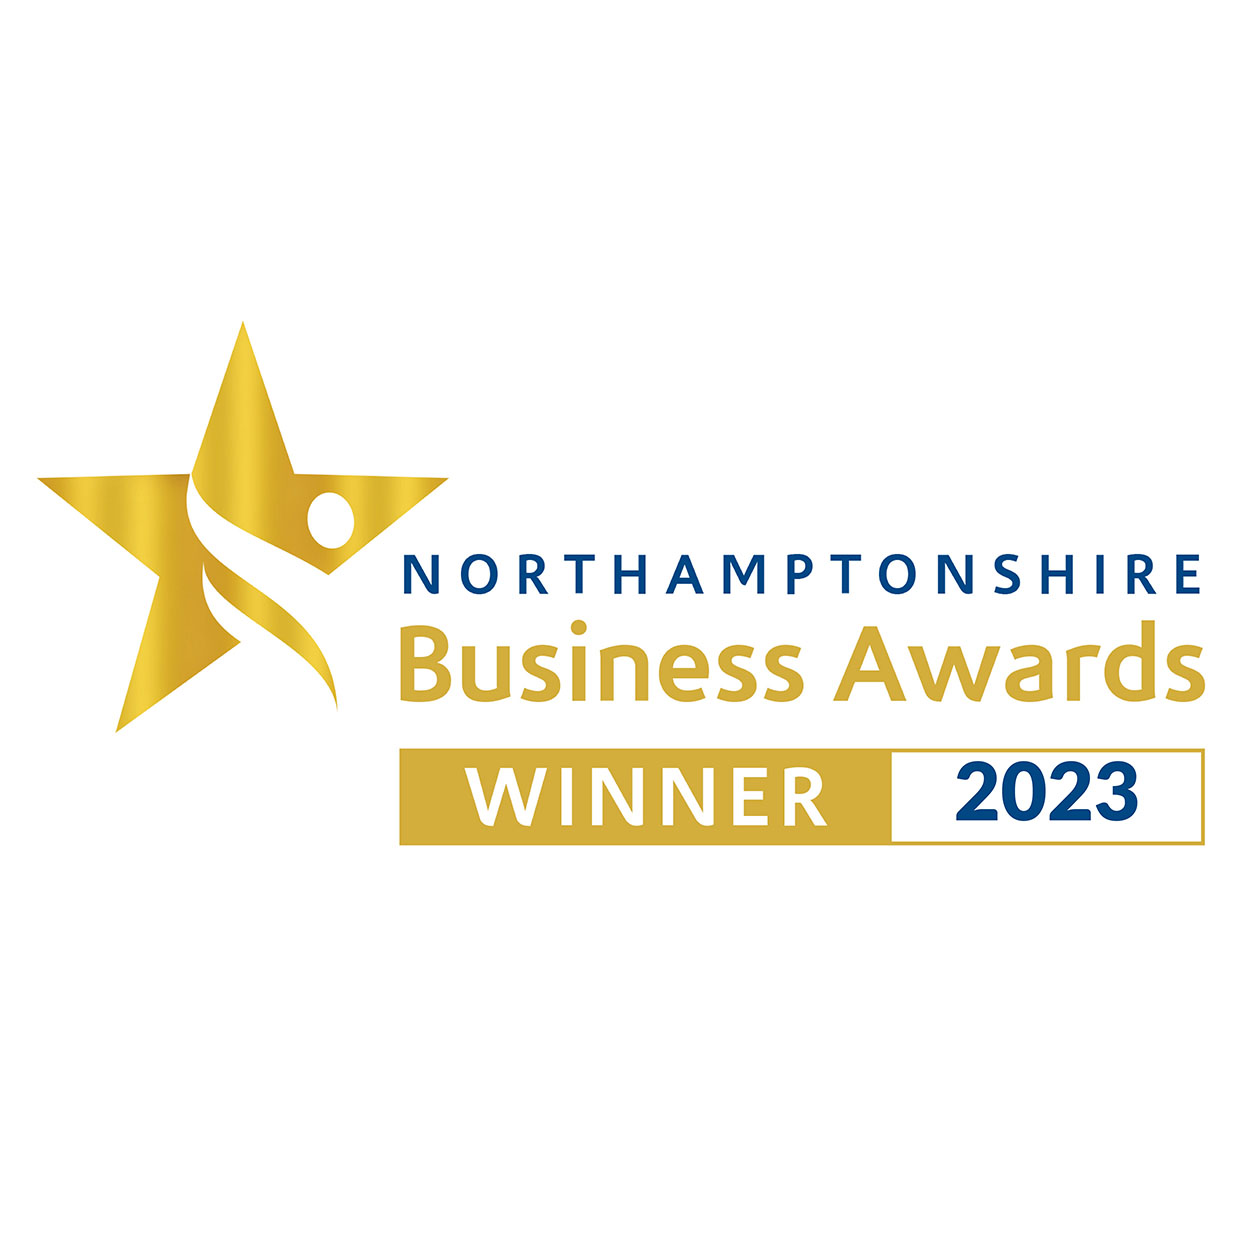 Northamptonshire Business Awards - Winner 2023